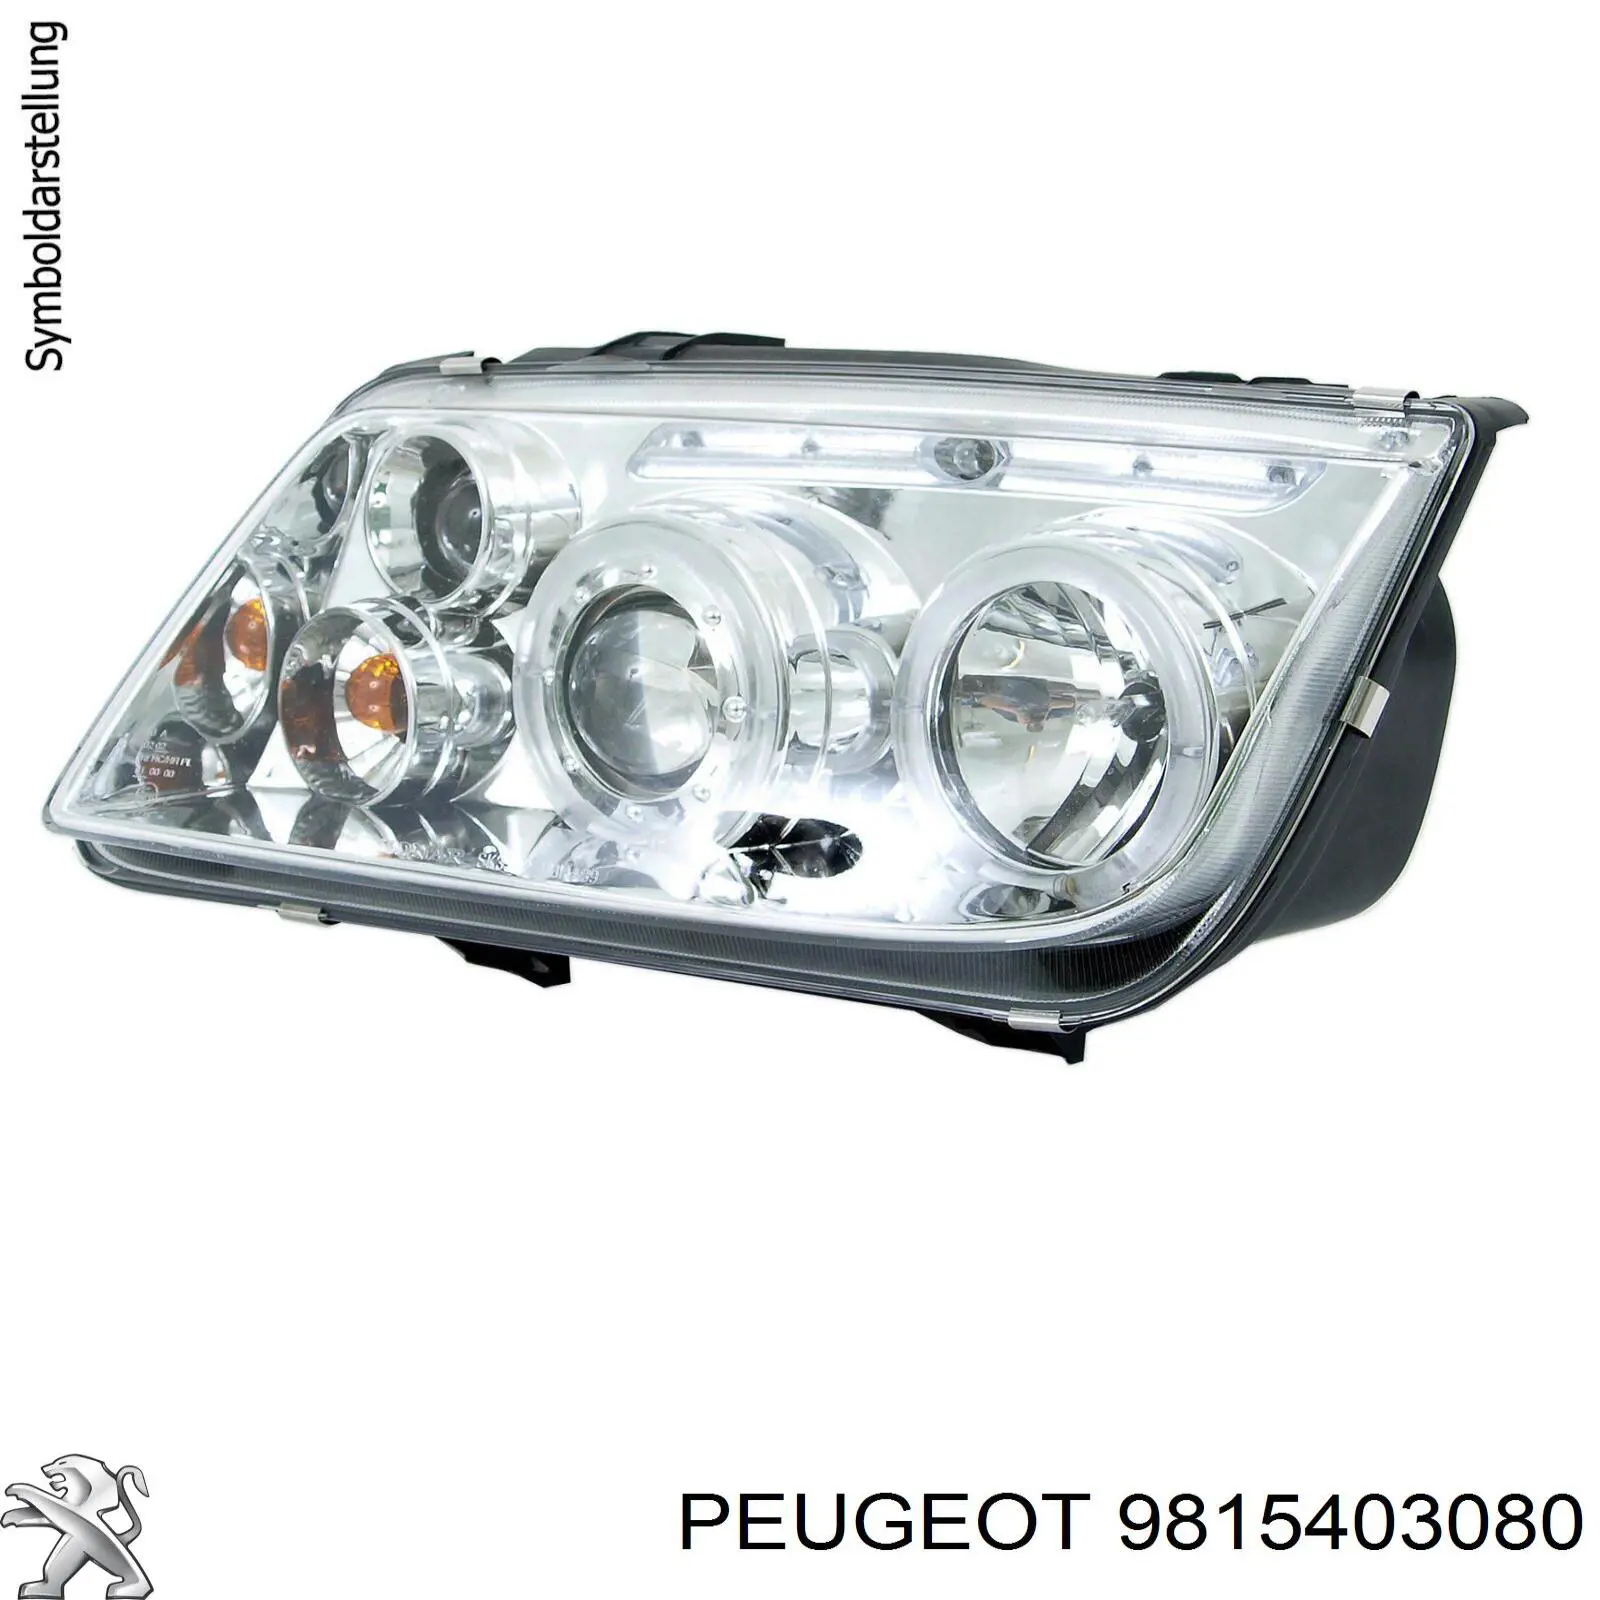 9815403080 Peugeot/Citroen